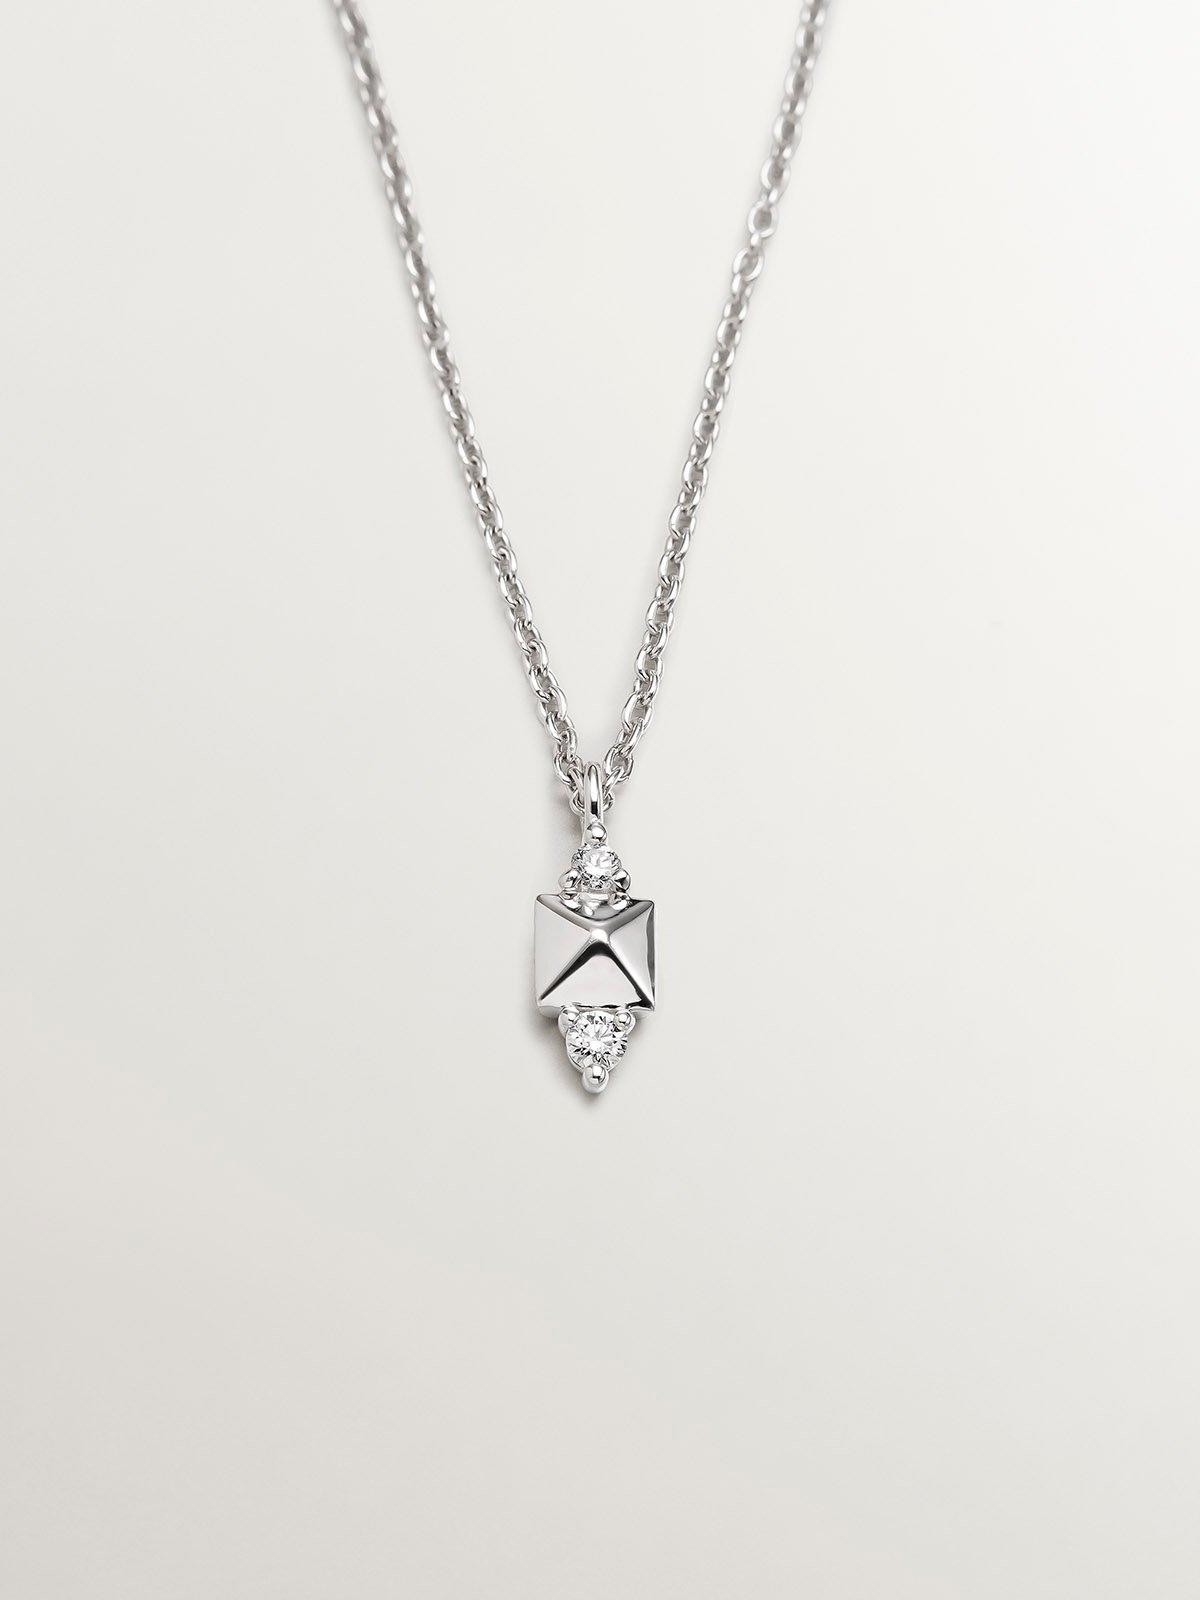 18k white gold pendant with tachuela and diamond